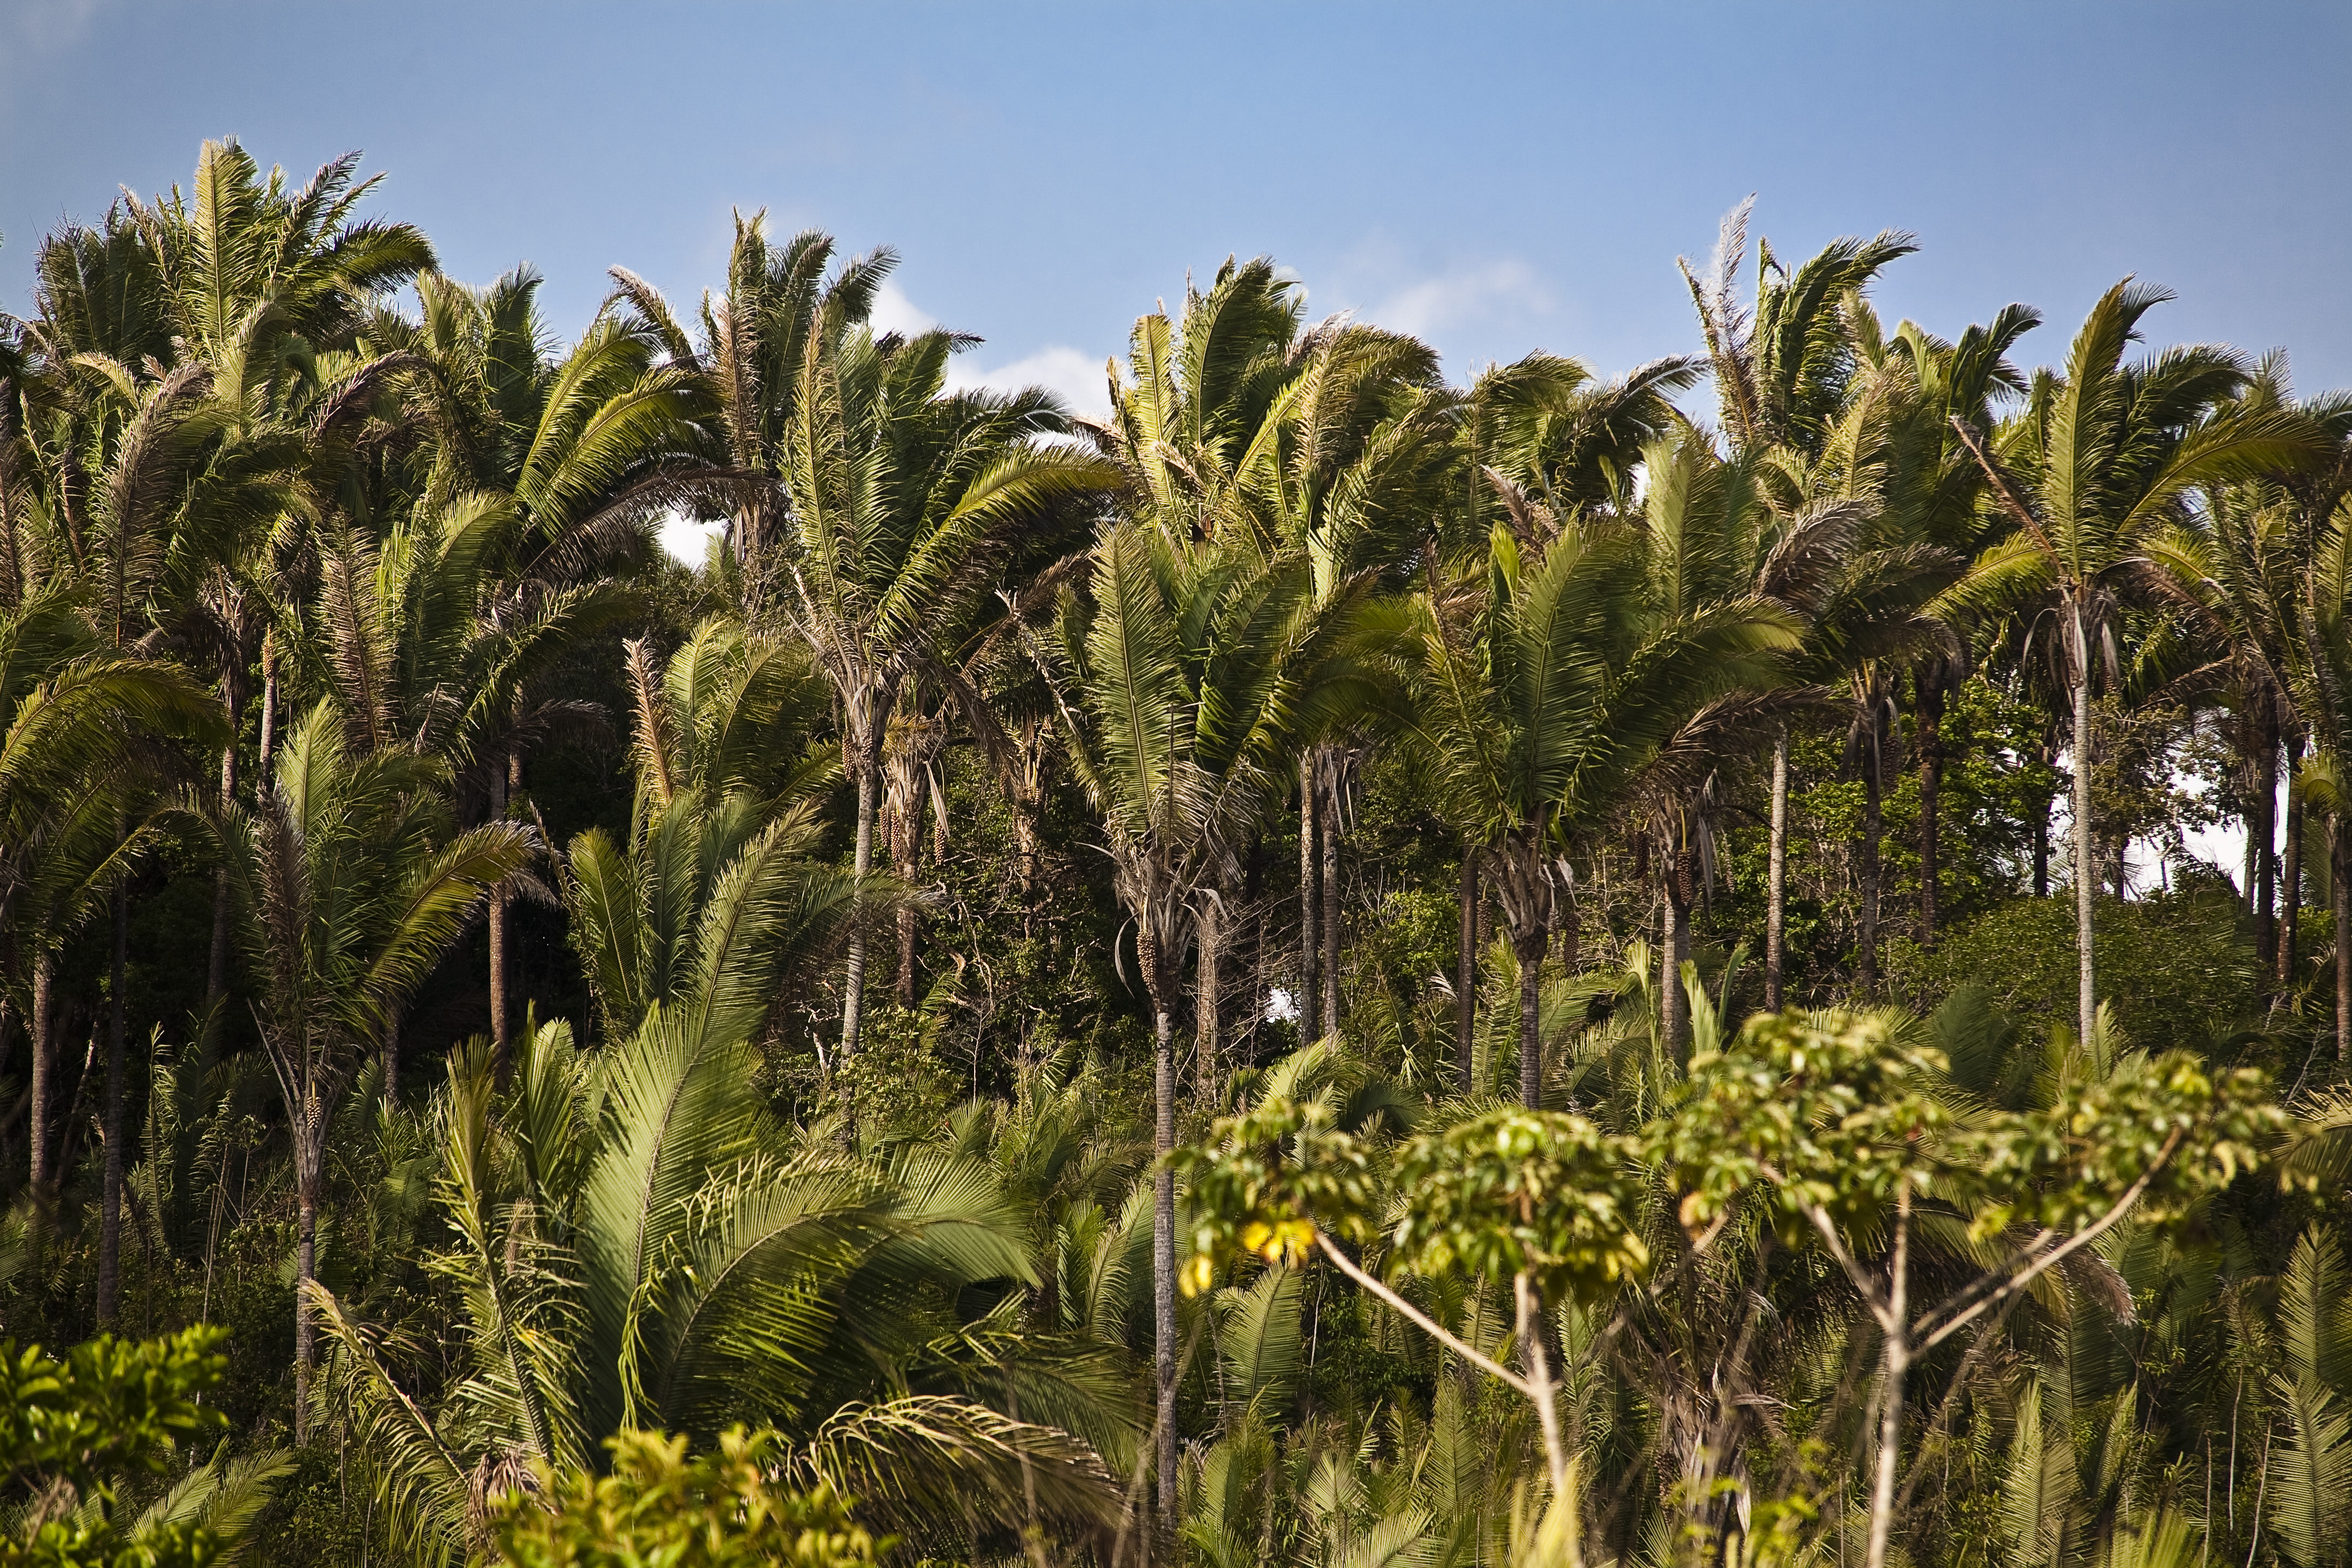 Babaçu trees in Maranhao State, northeastern Brazil, on Oct. 18, 2009. (Ricardo Funari—Brazil Photos/Getty Images)